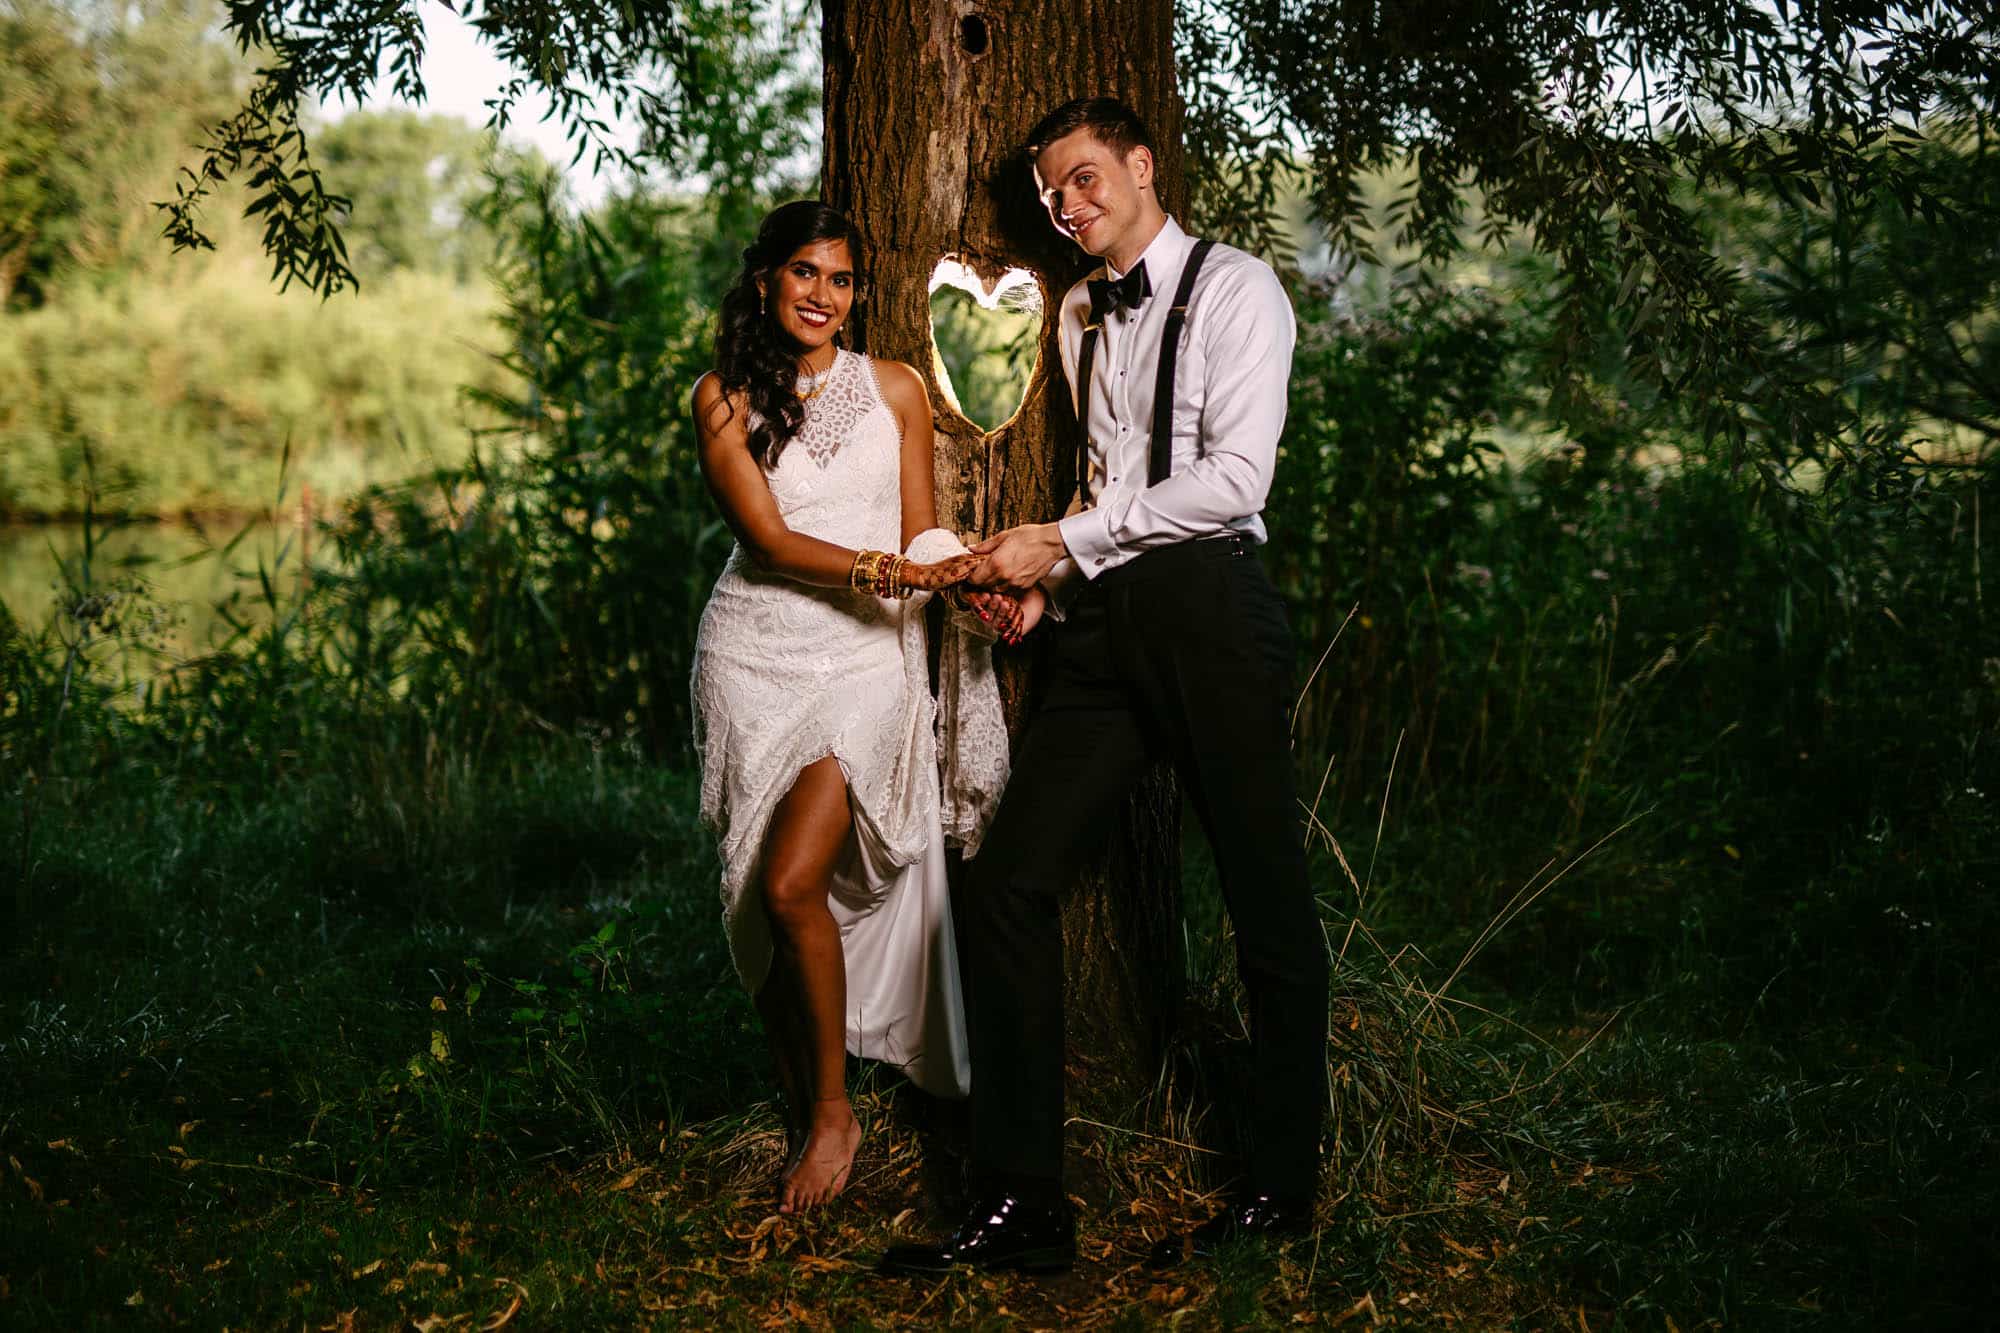 Bohemian wedding dress in a forest